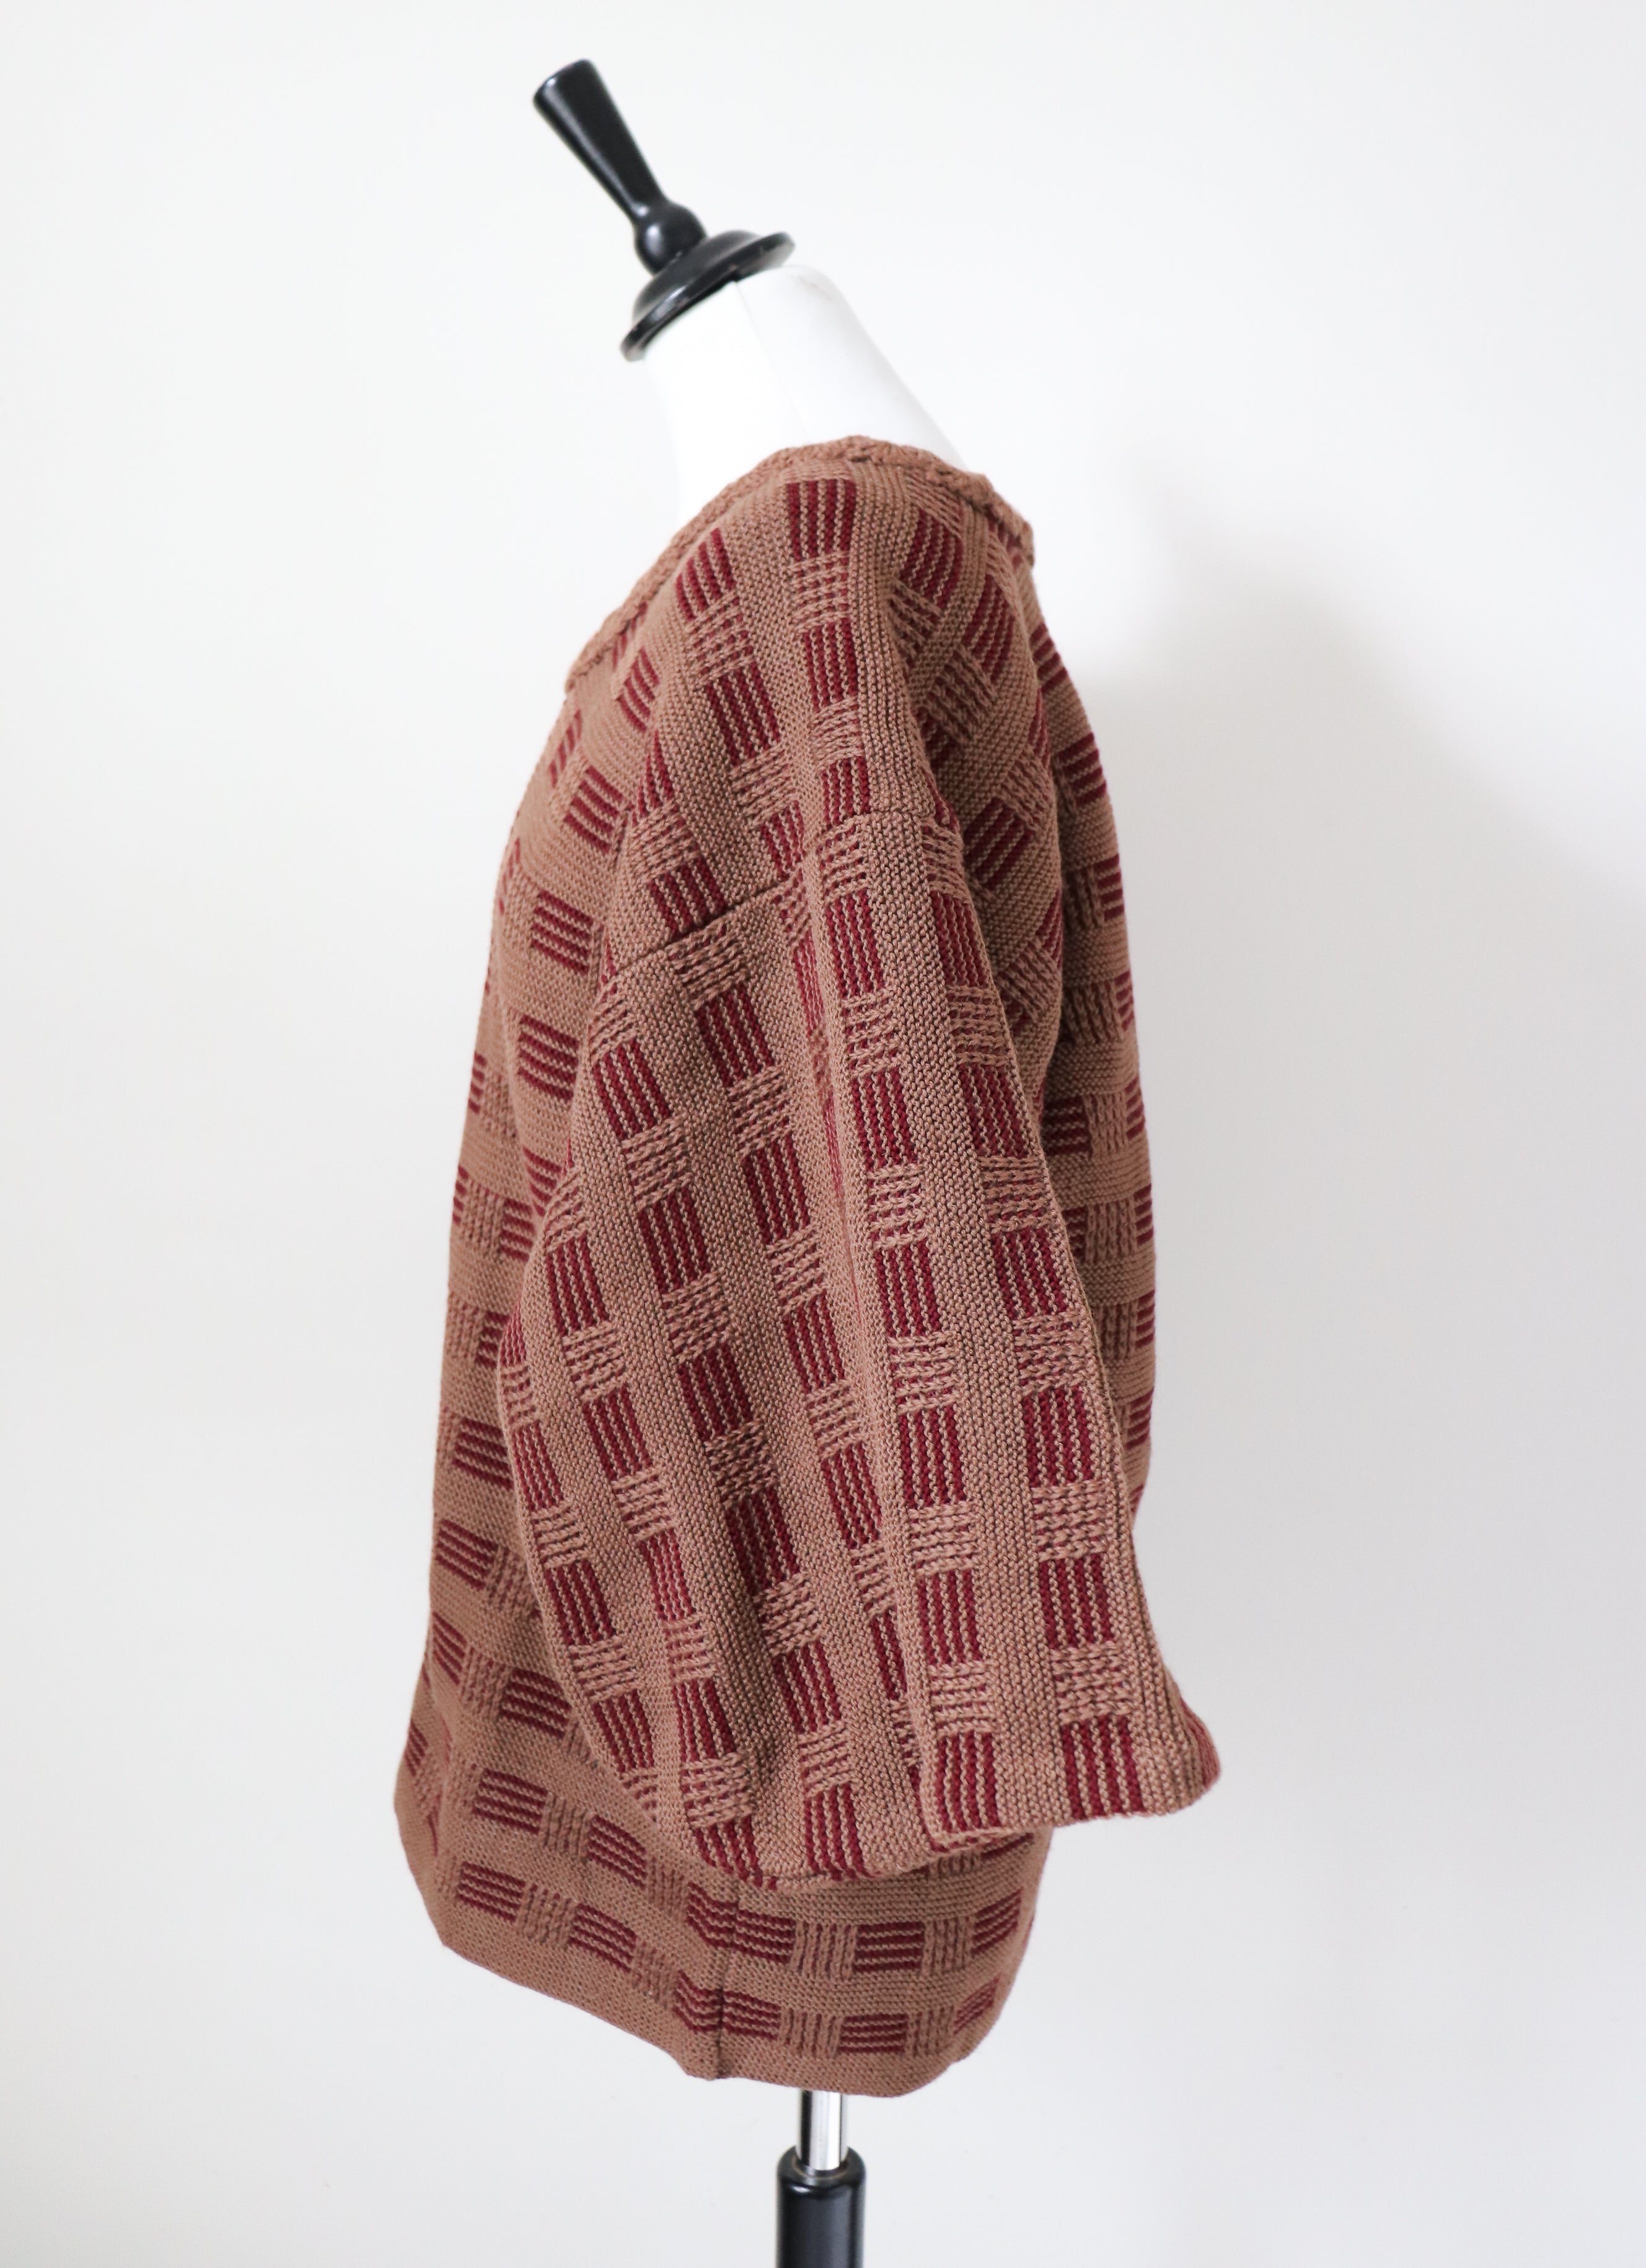 Vintage Kimono Cardigan - Hand Knitted Brown Wool - L / XL - UK 14 / 16